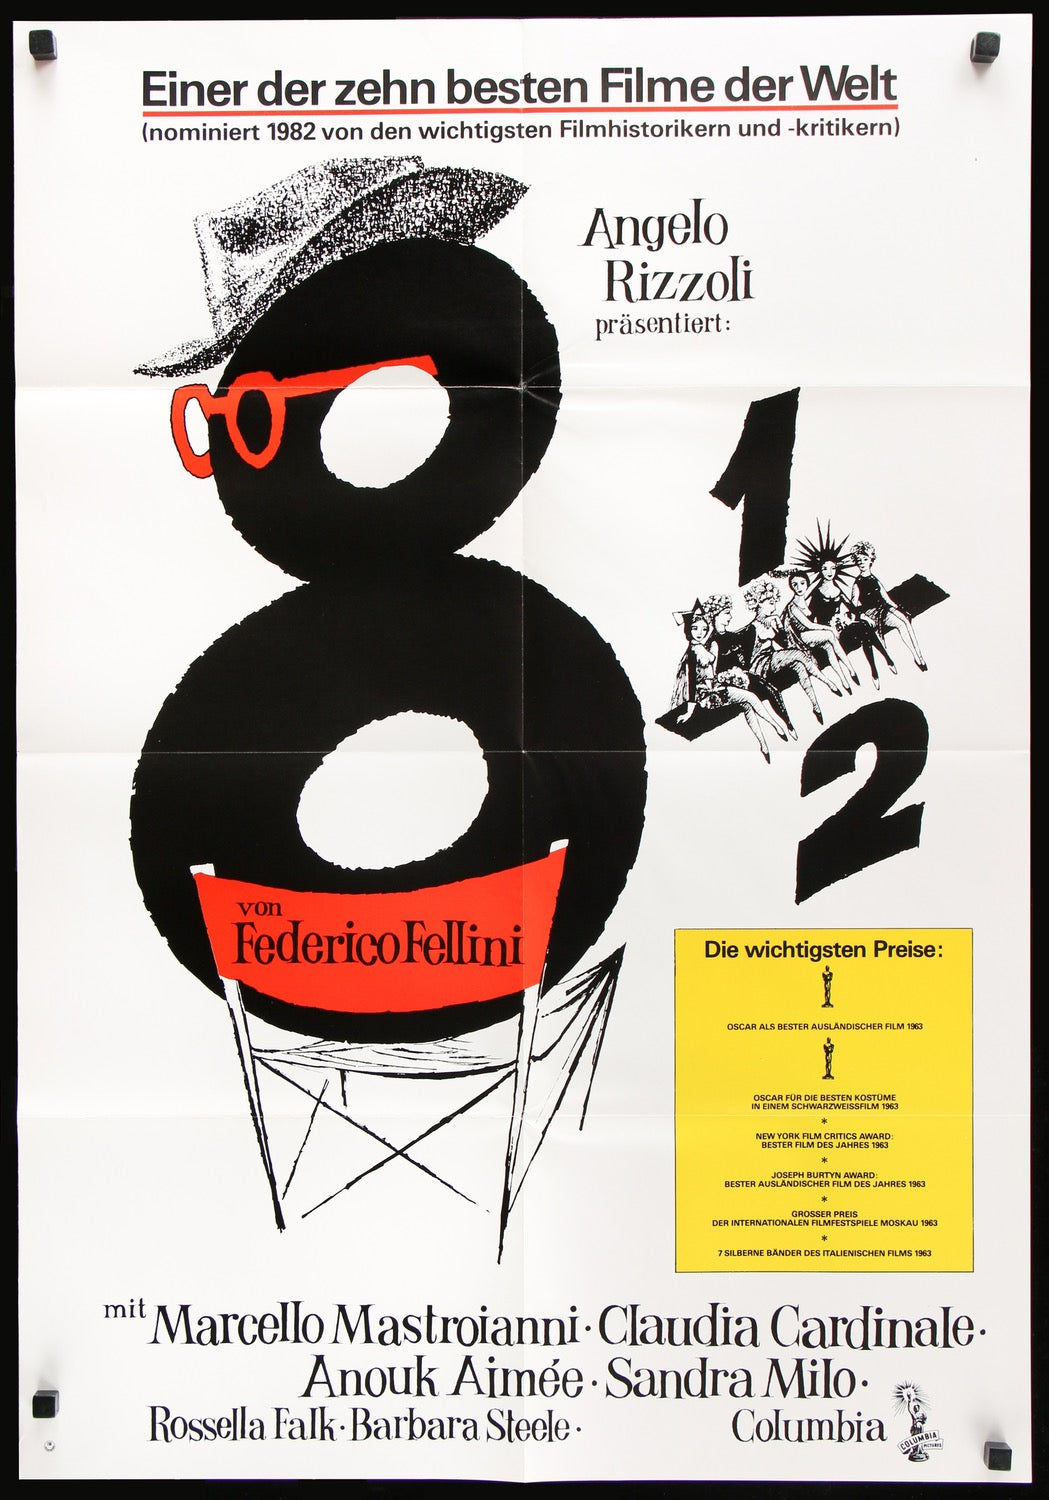 8 1/2 (1963) original movie poster for sale at Original Film Art